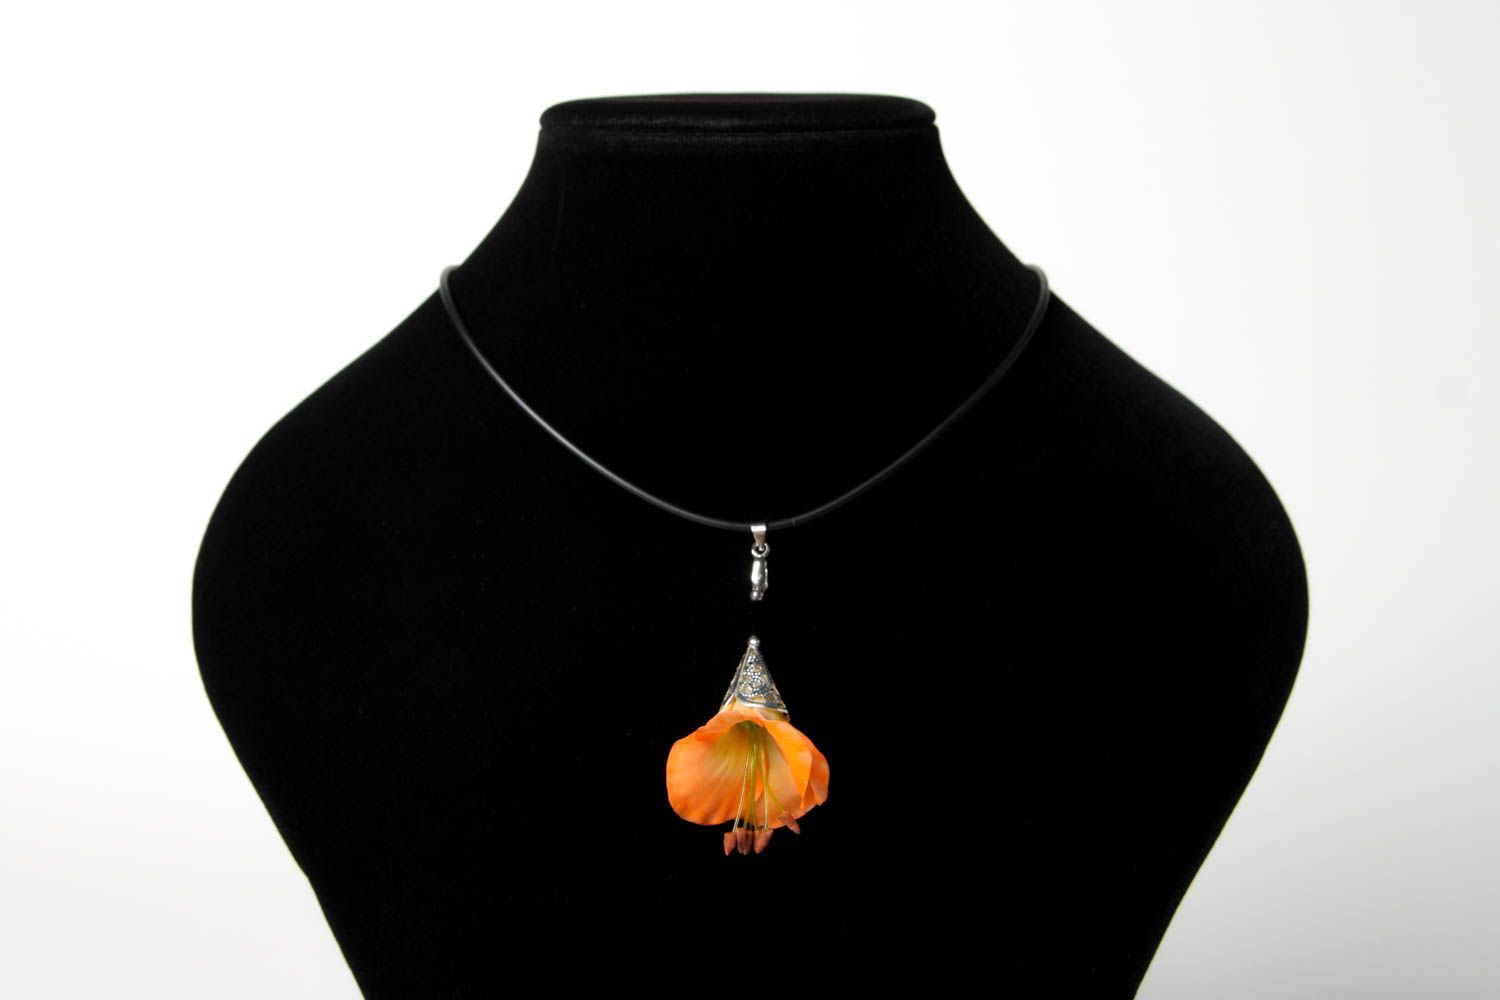 Handmade pendant designer pendant for girl clay pendant unusual gift ideas photo 1